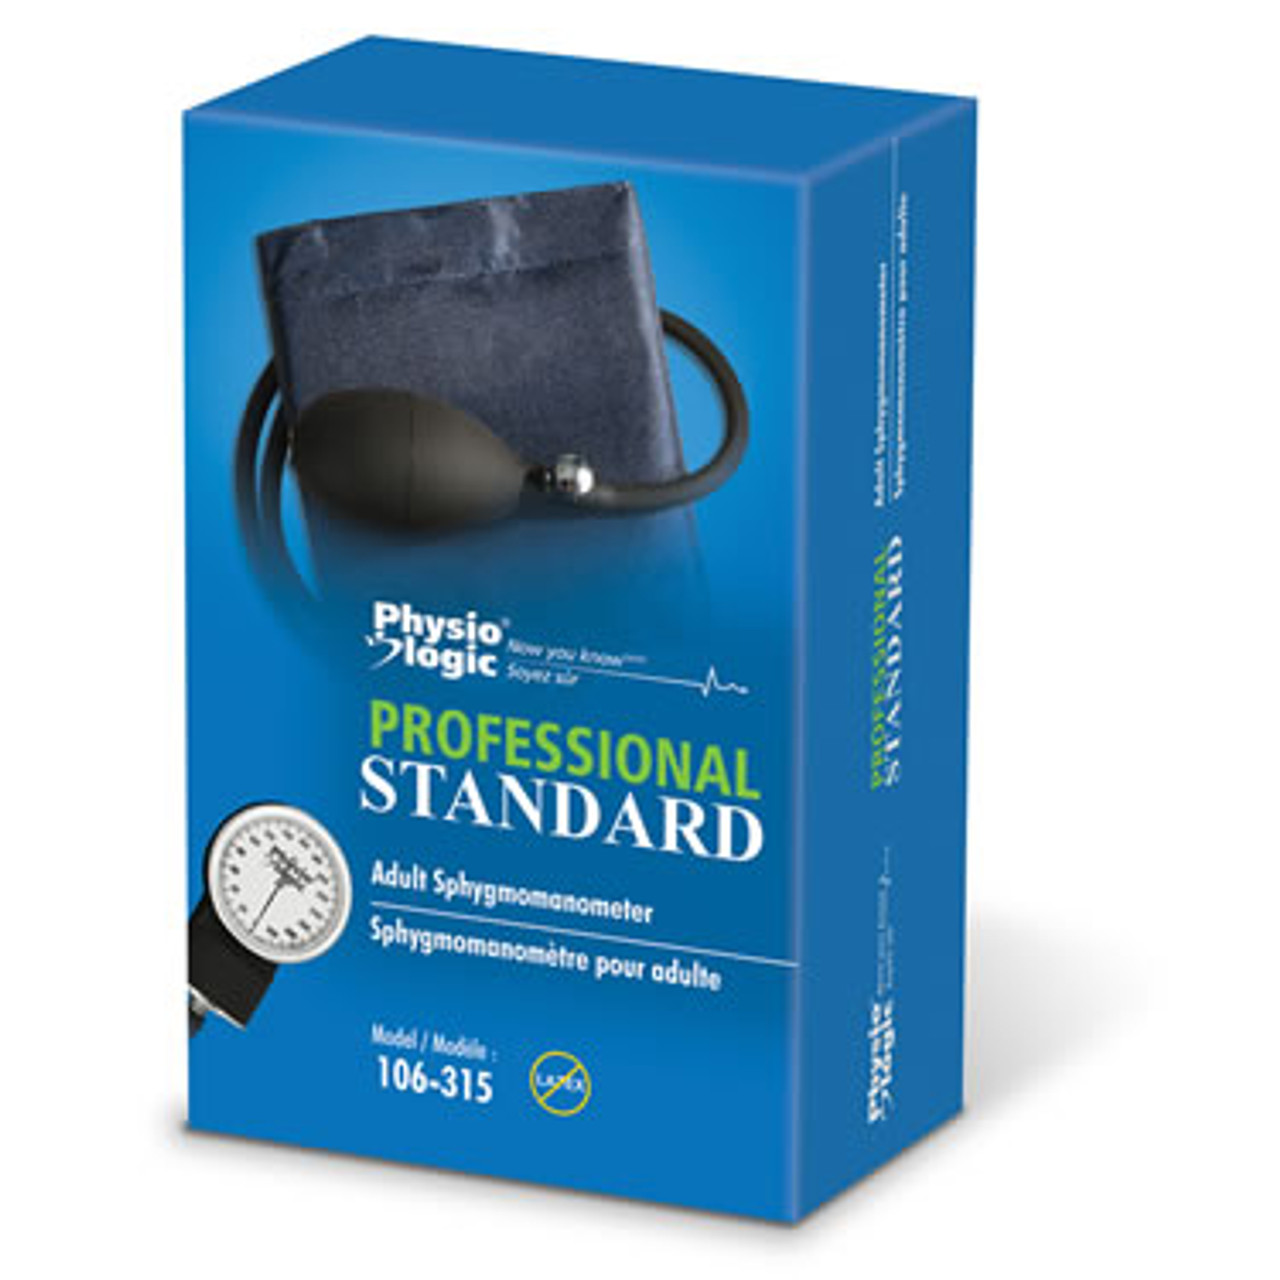 Amg Professional Standard Adult Sphygmomanometer Diagnostic